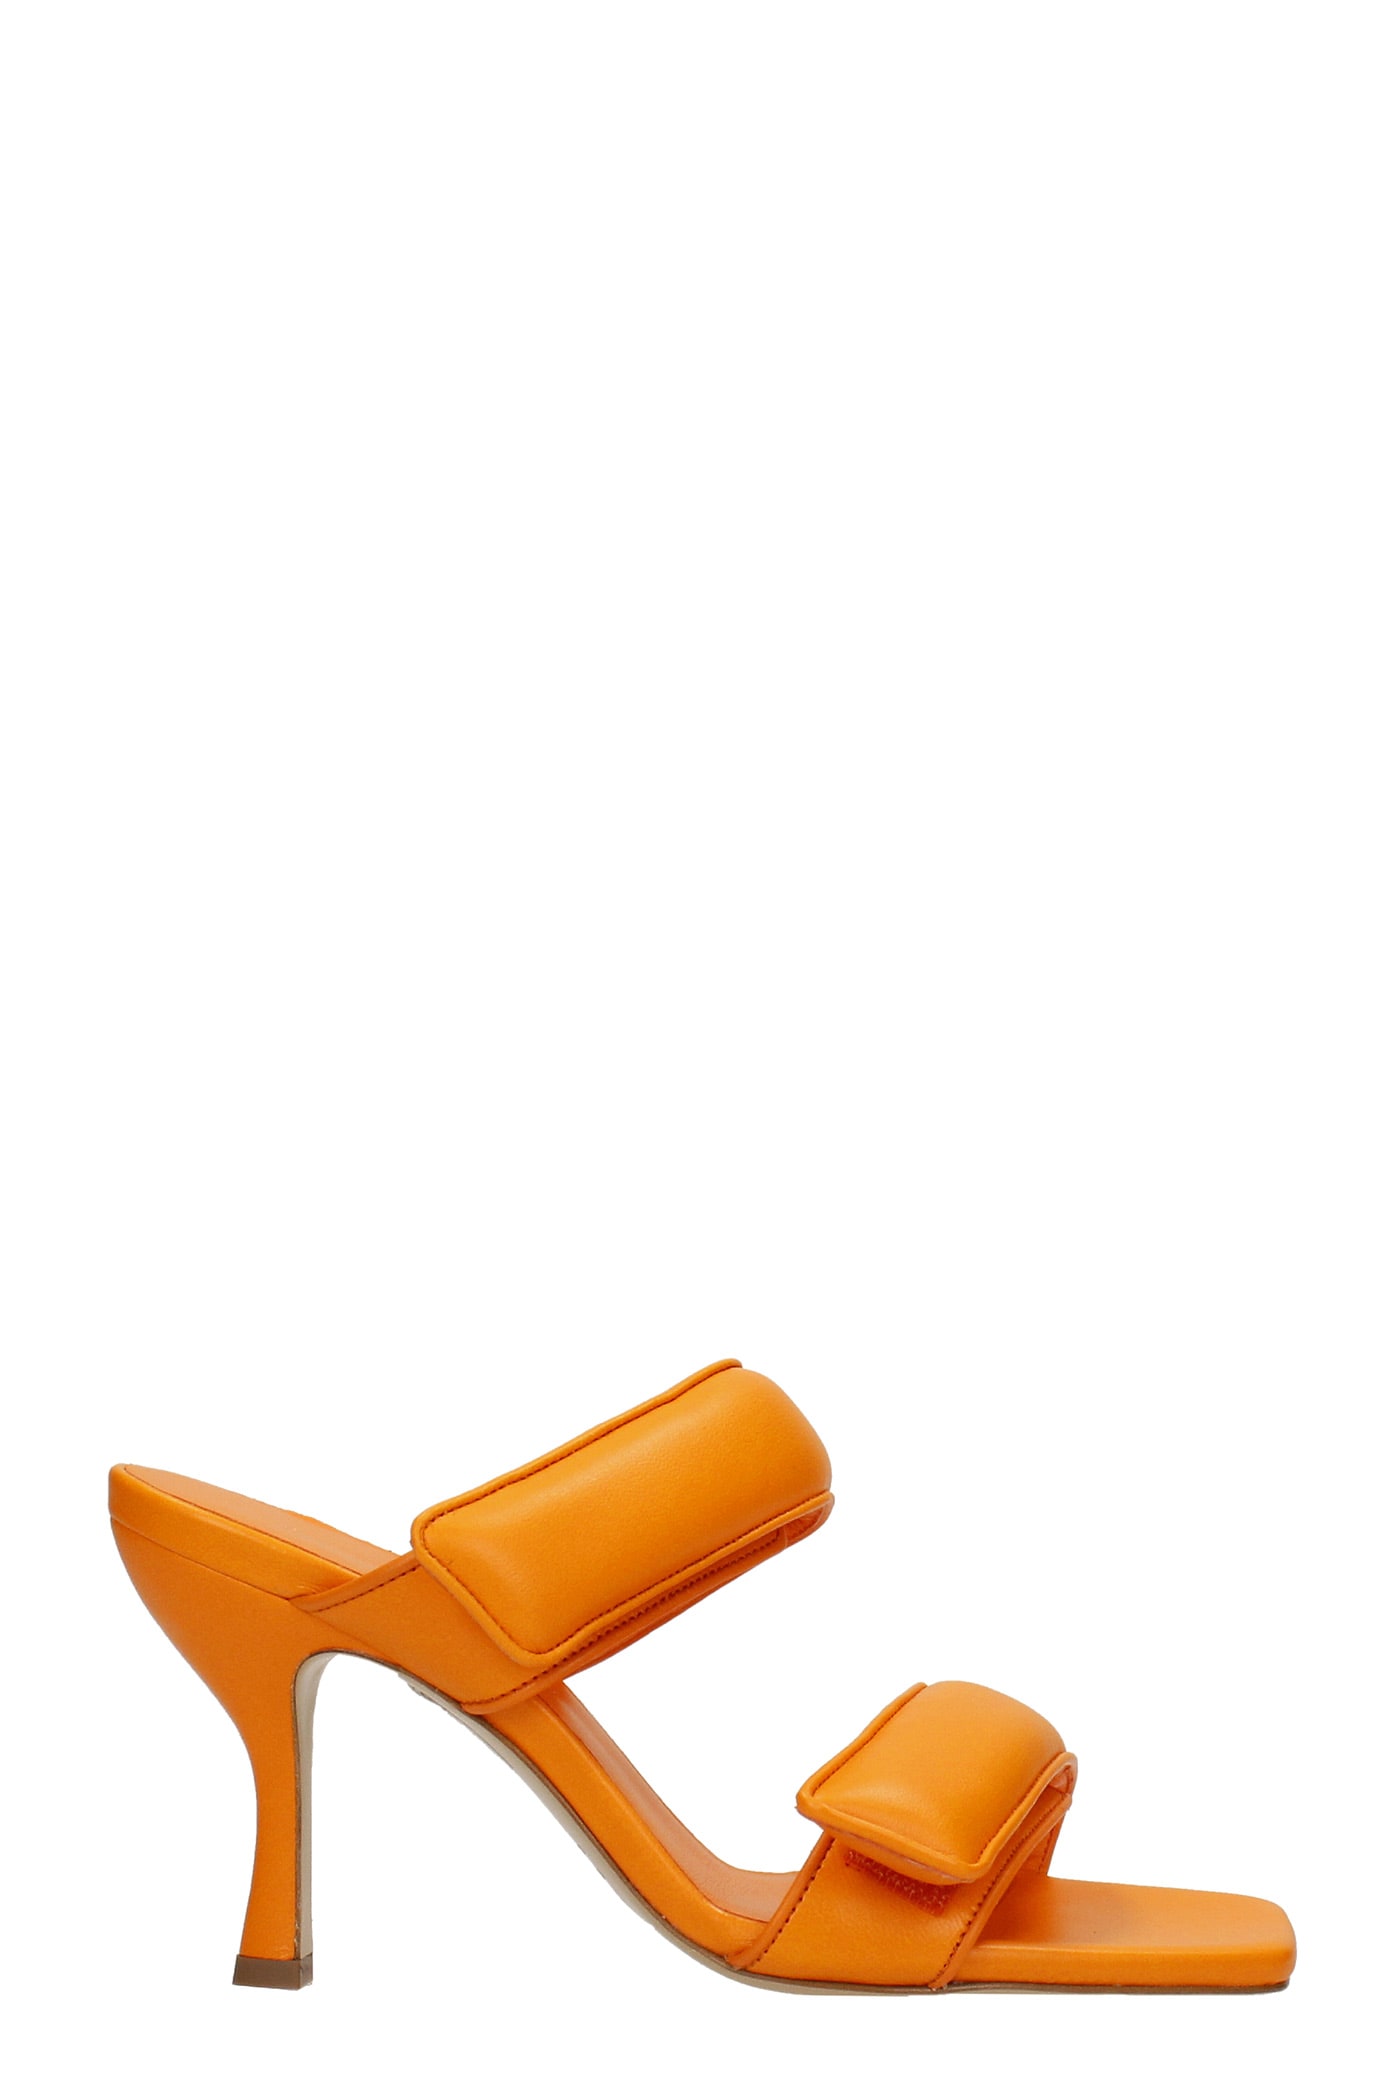 Gia X Pernille Teisbaek Perni 03 Sandals In Orange Leather